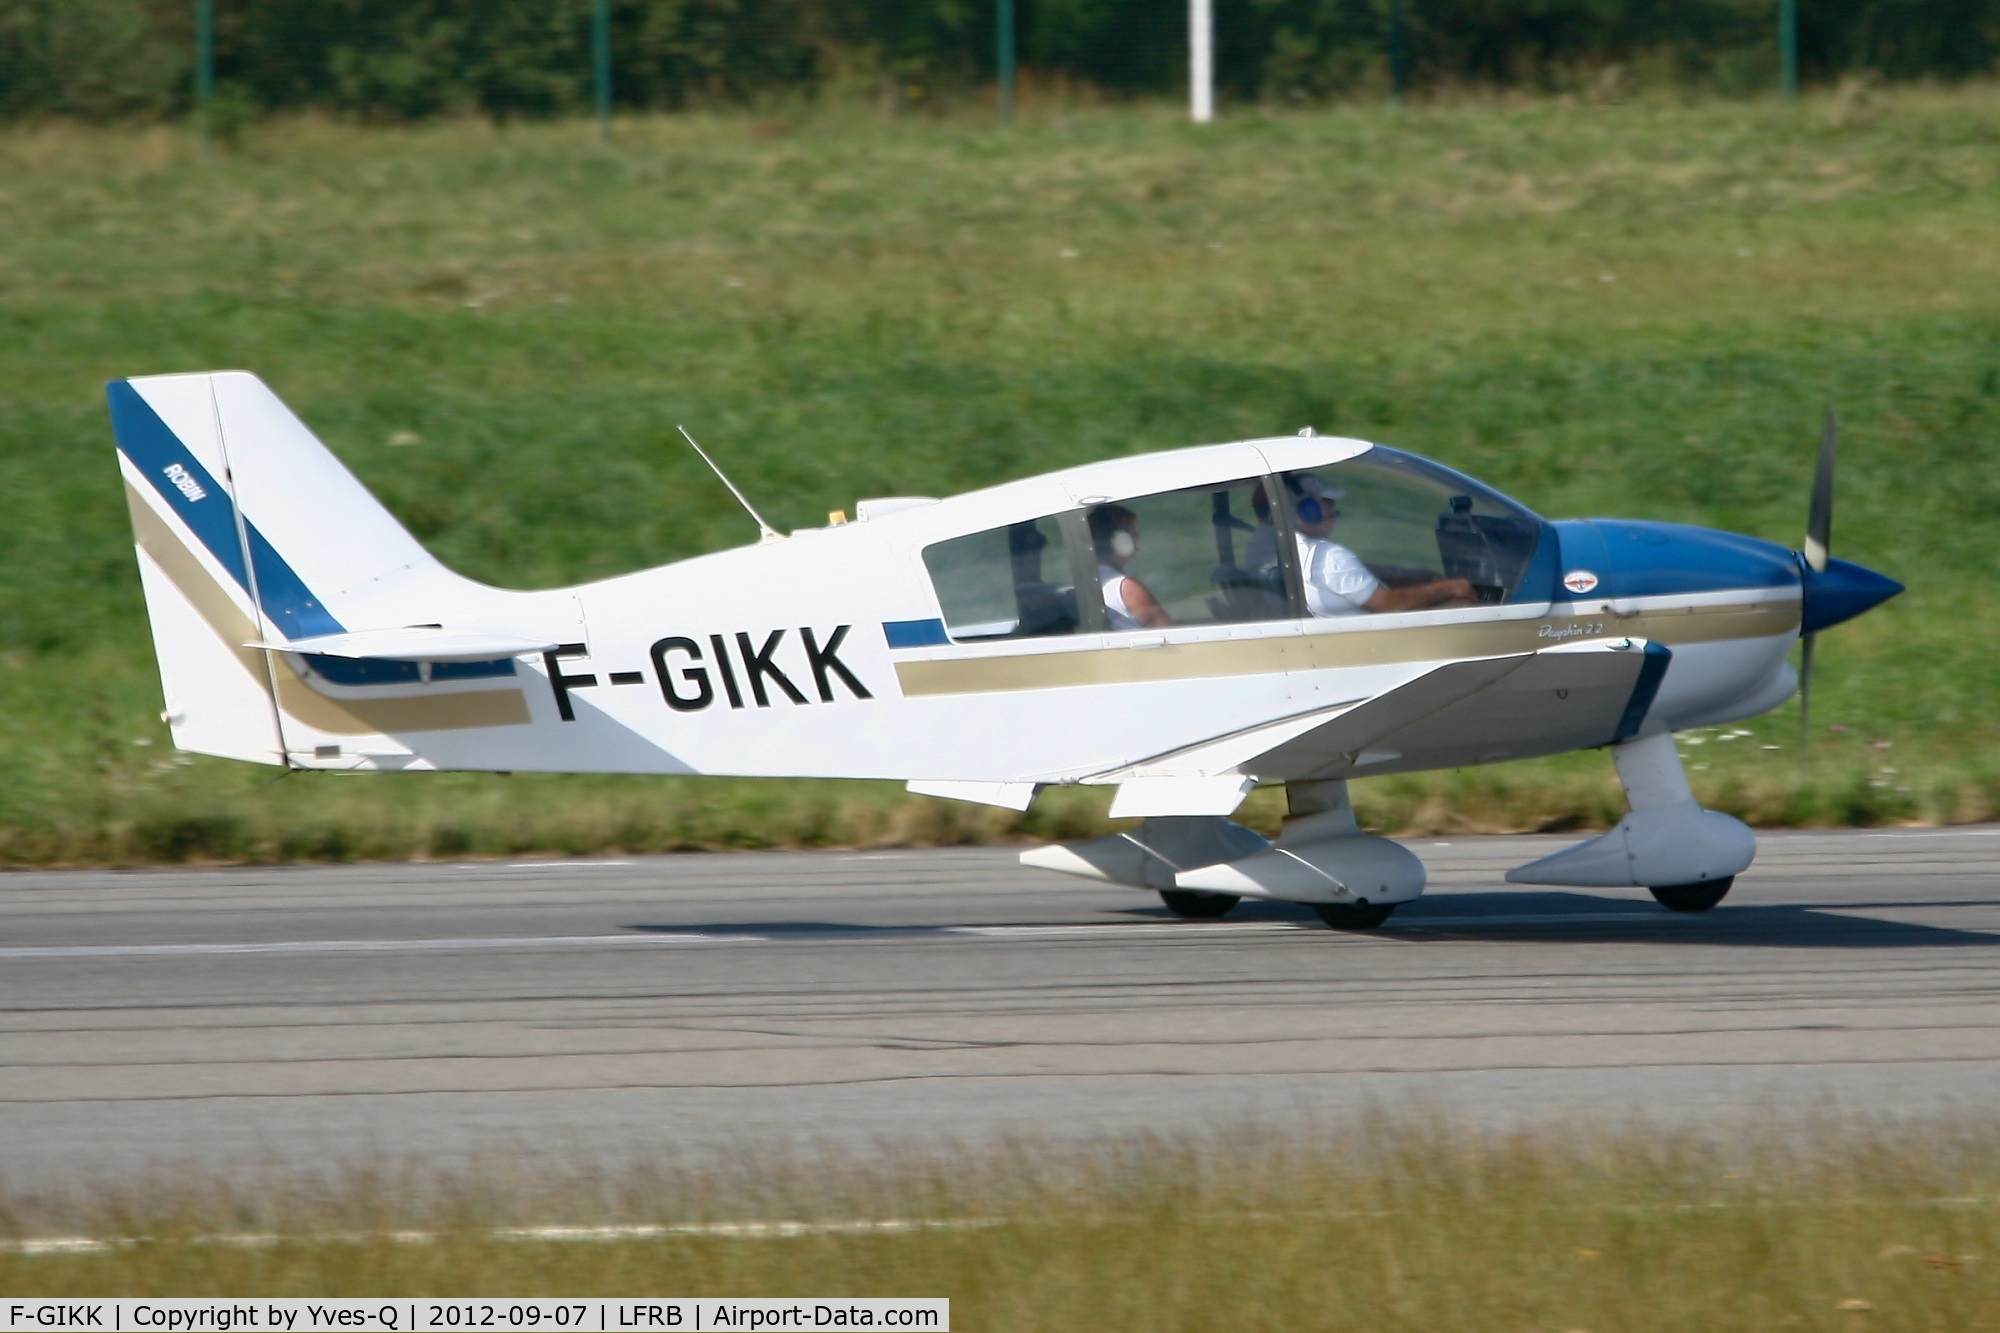 F-GIKK, Robin DR-400-120 C/N 1942, Robin DR-400-120, Landing rwy 07R, Brest-Guipavas Airport (LFRB-BES)